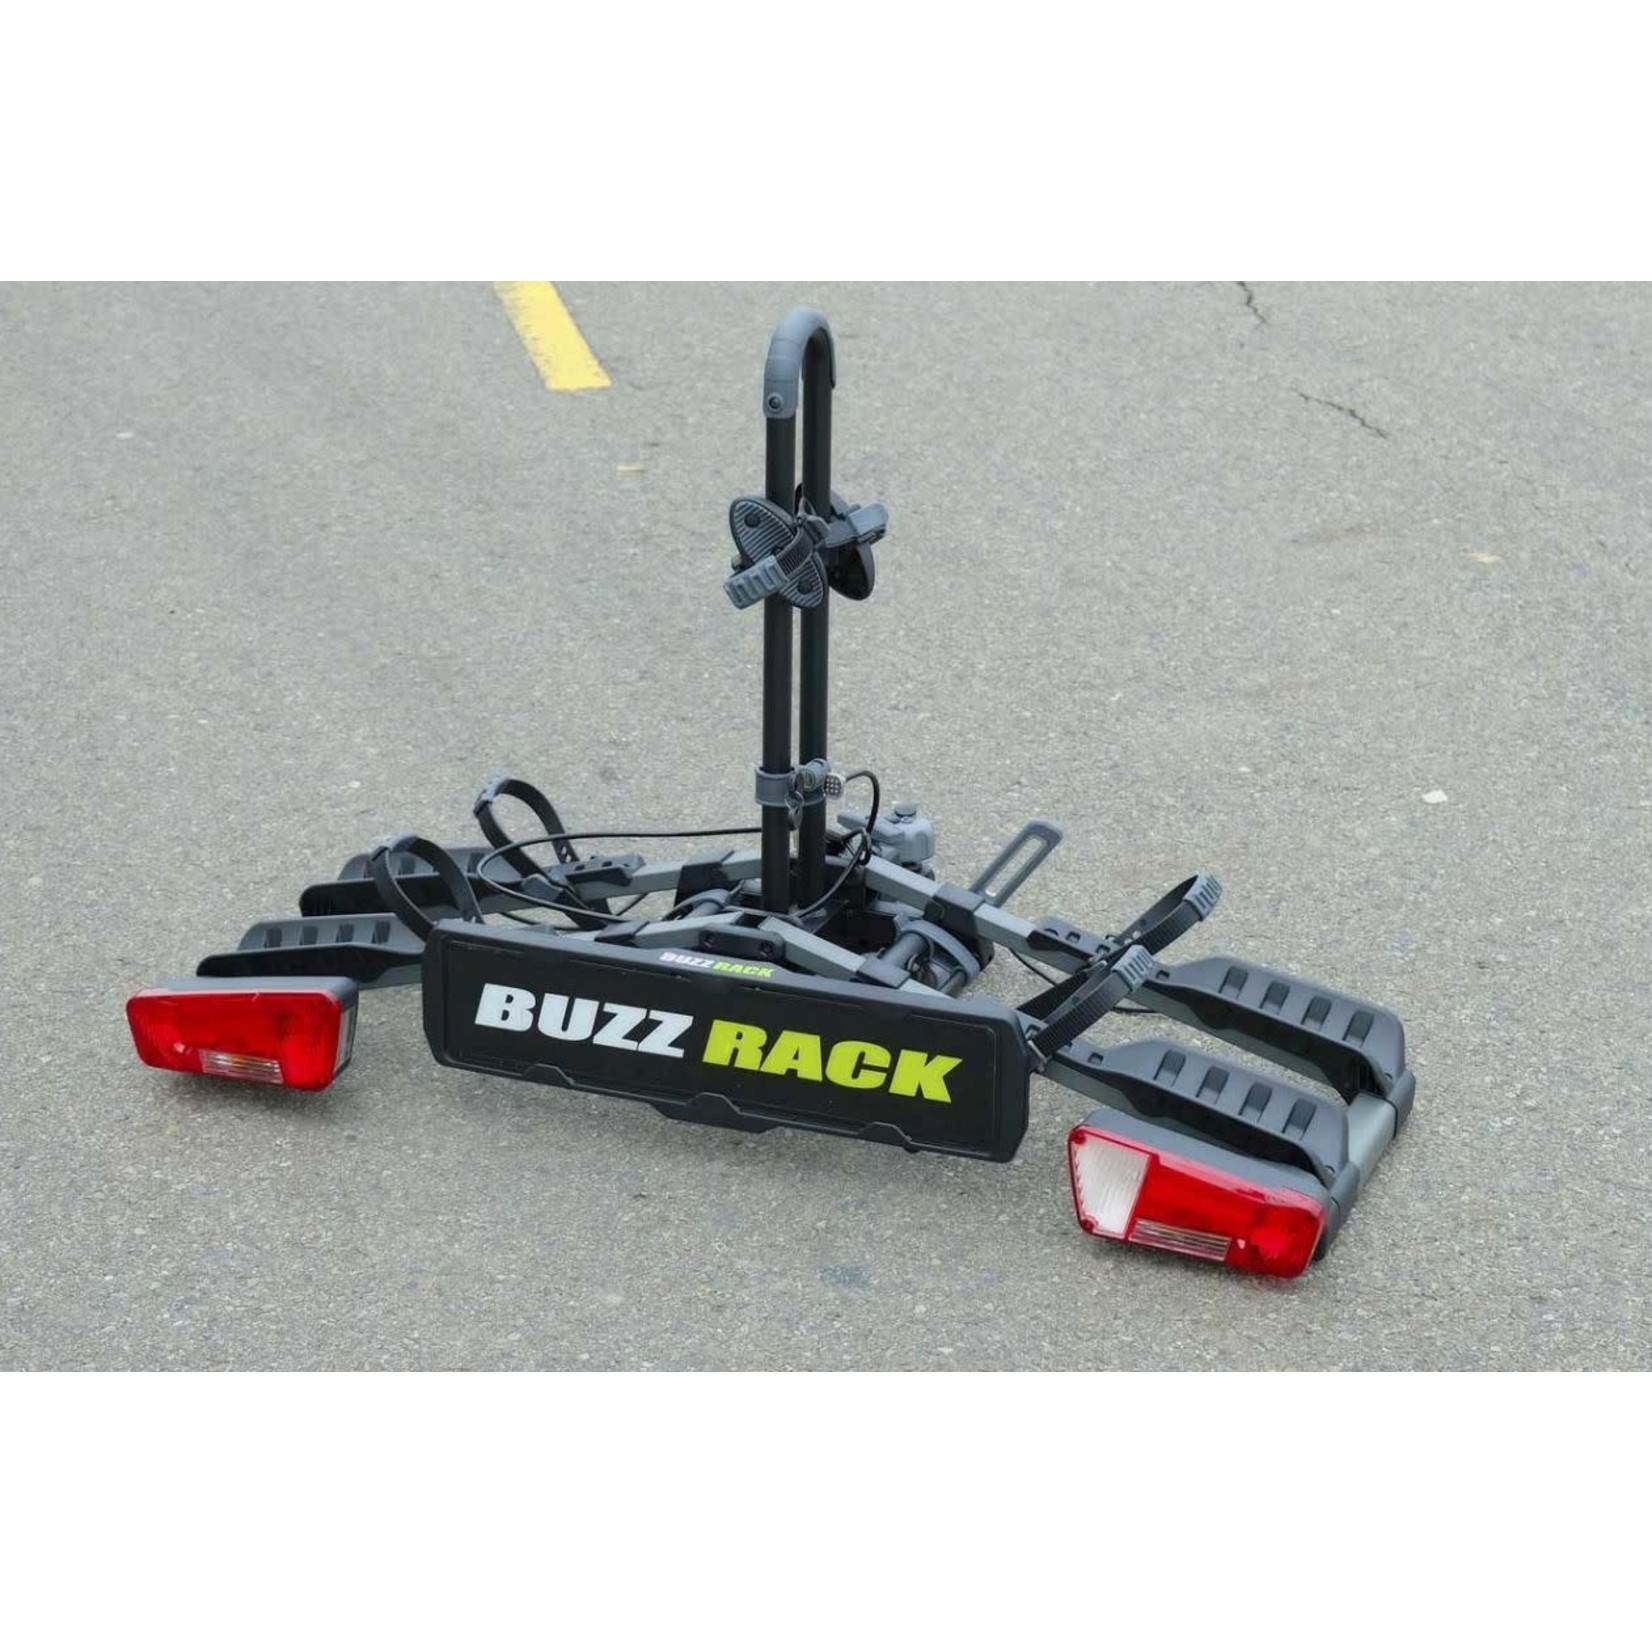 BuzzRack Buzz Rack Eazzy 2 Bike Towball Mount Folding Platform Bike Carrier Rack